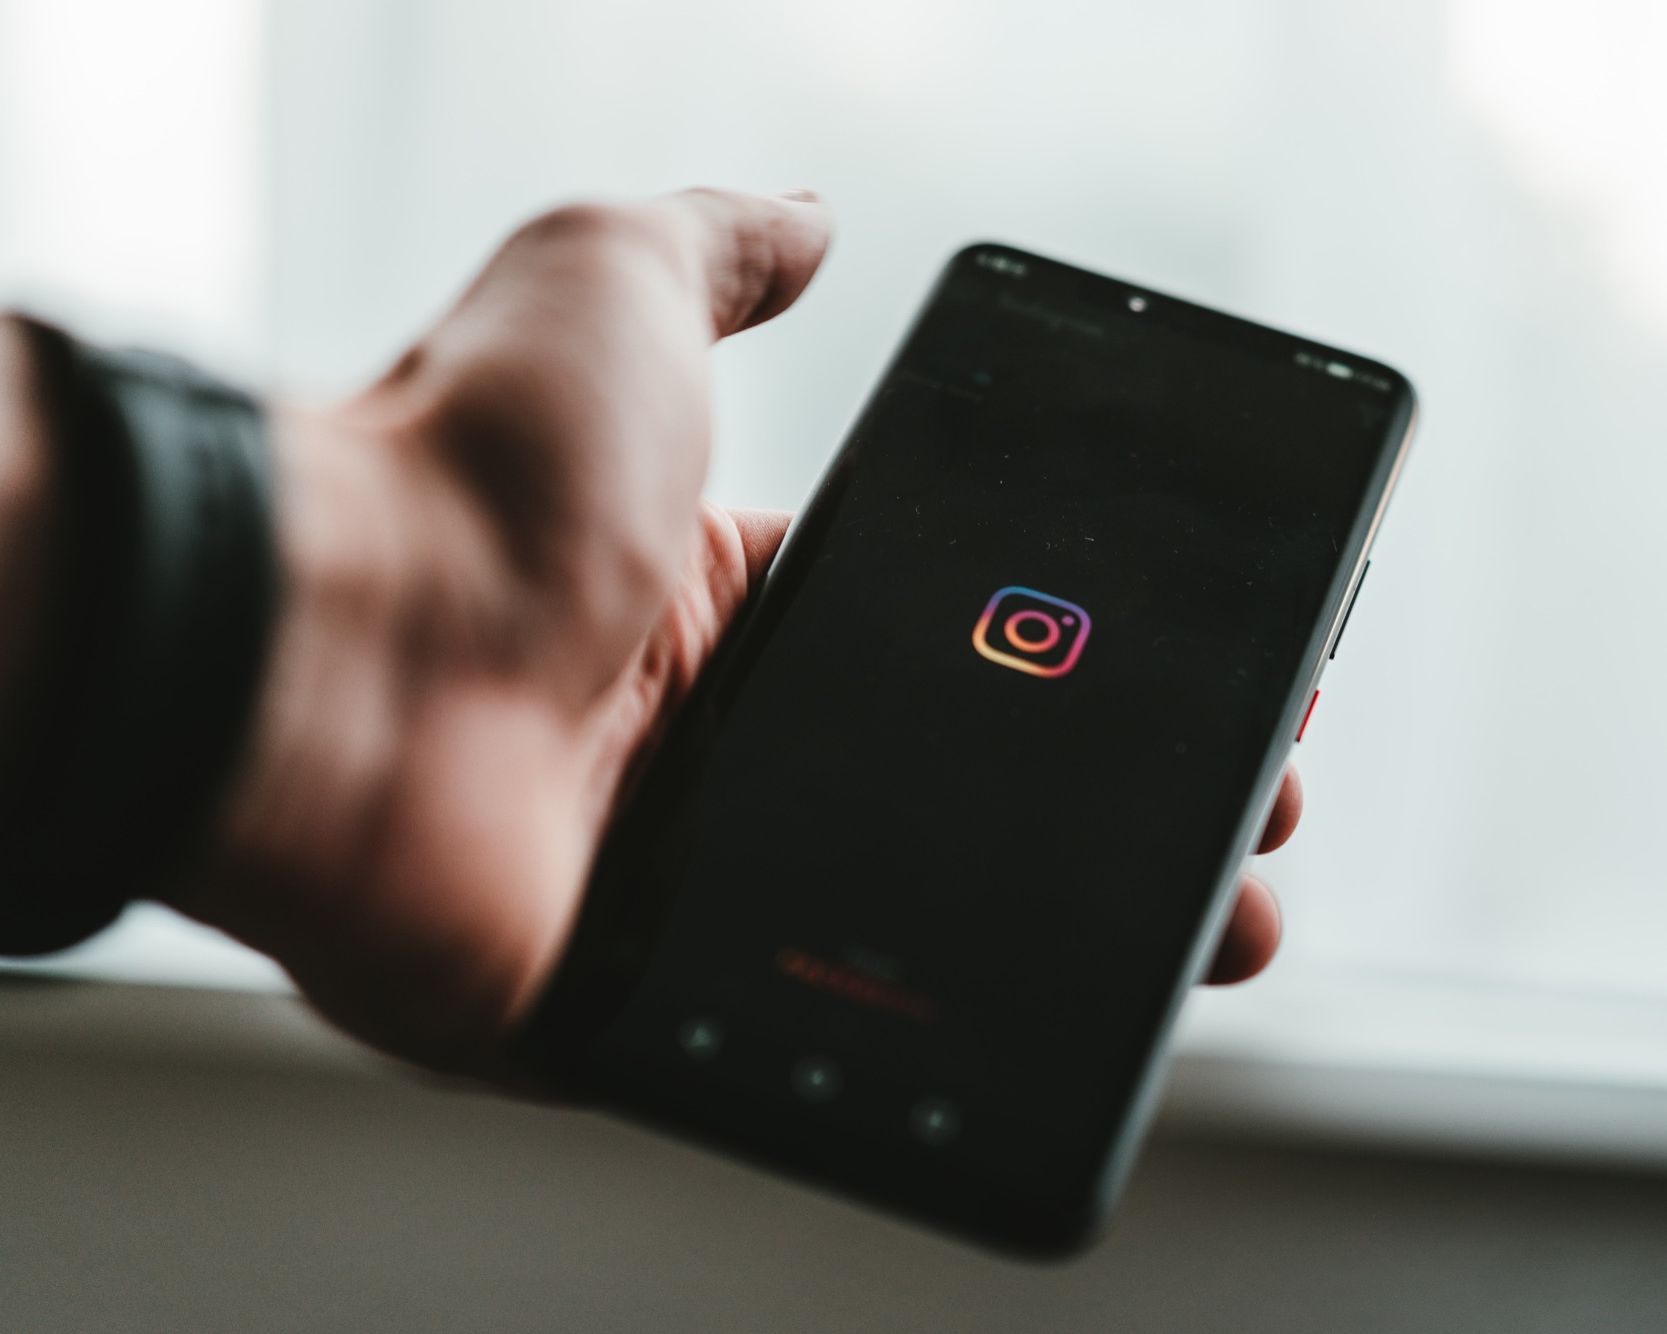 instagram ads live streams der algorithmus REBELKO AACHEN AGENTUR MARKETING BRANDING SOCIAL MEDIA IMAGE UNSPLASH CC0